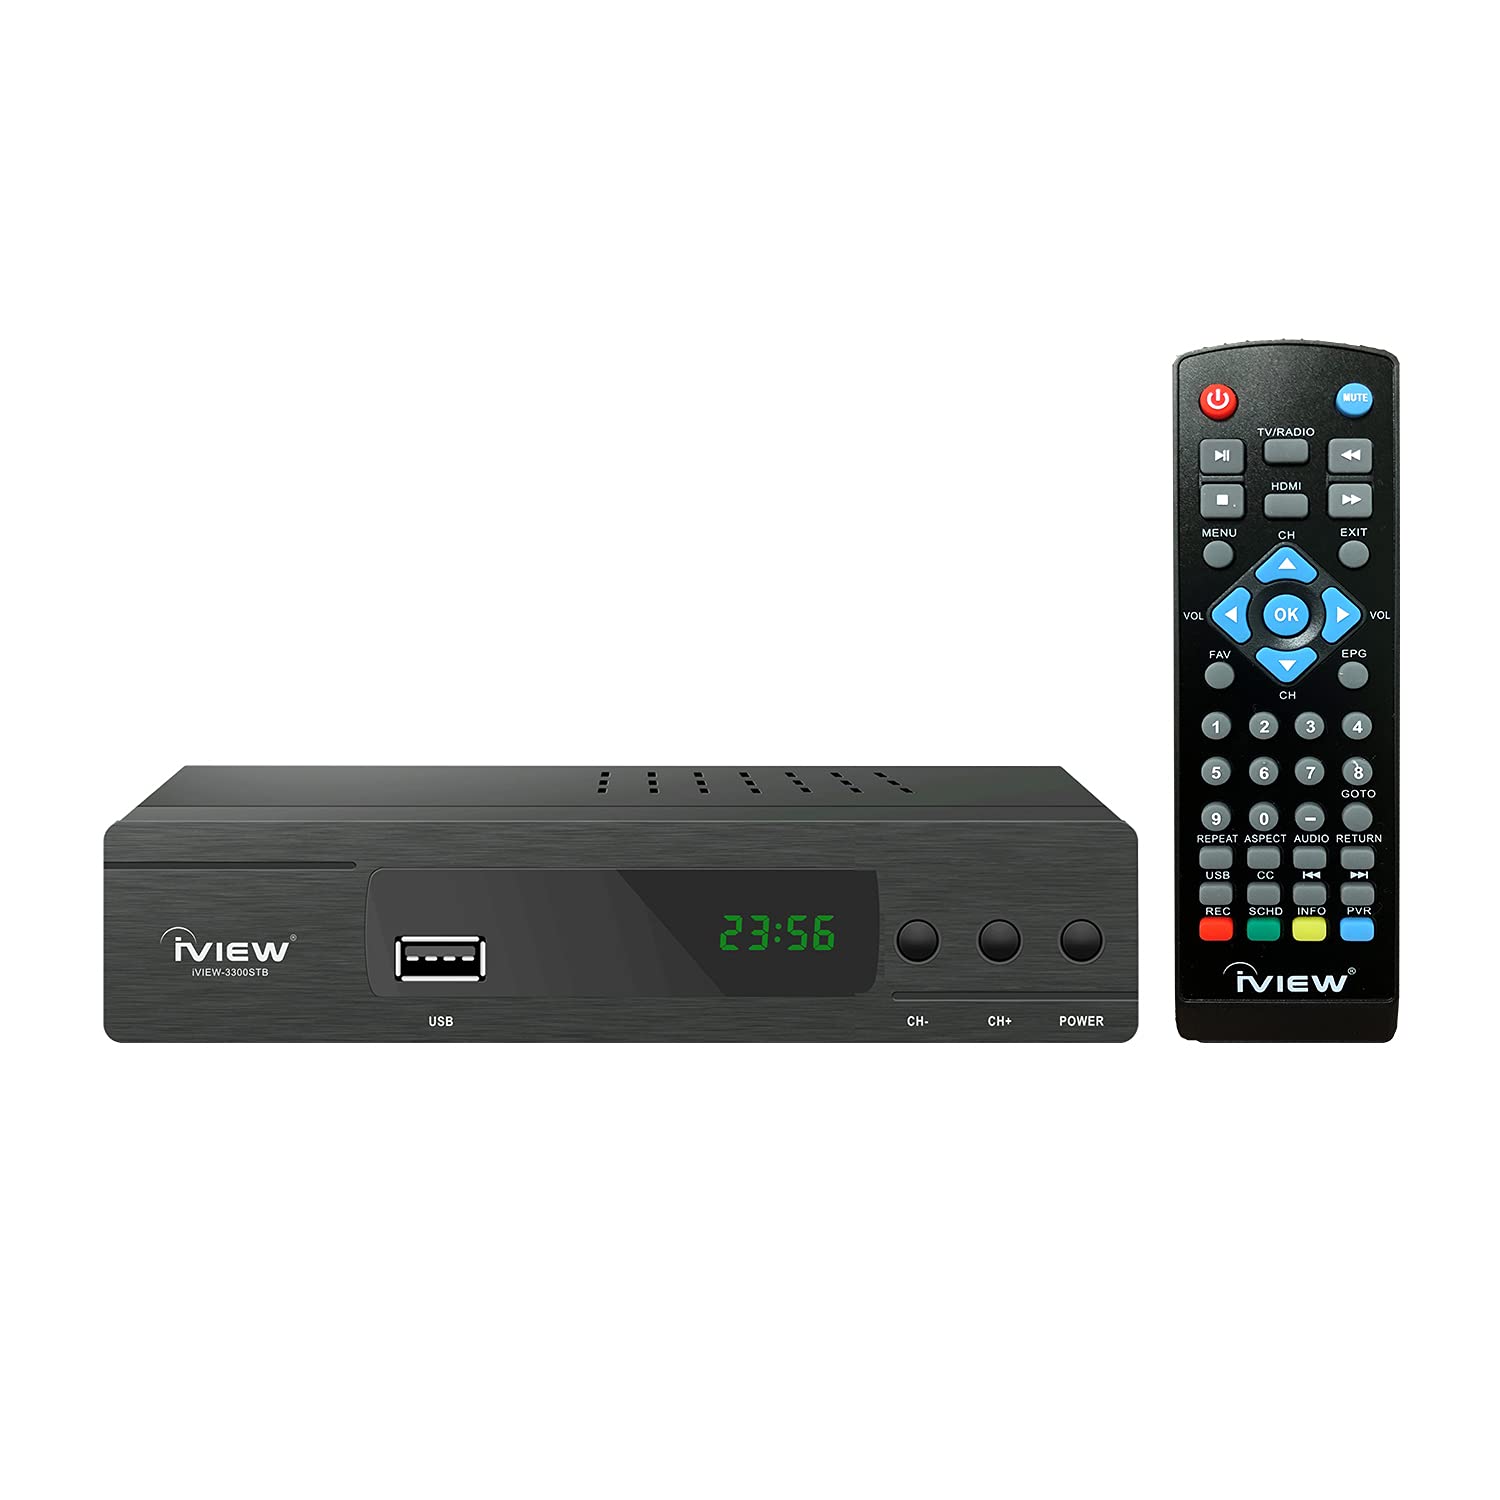 iView 3300STB ATSC Converter Box with Recording, Media Player, Built-in Digital Clock, Analog to Digital, QAM Tuner, HDMI, USB